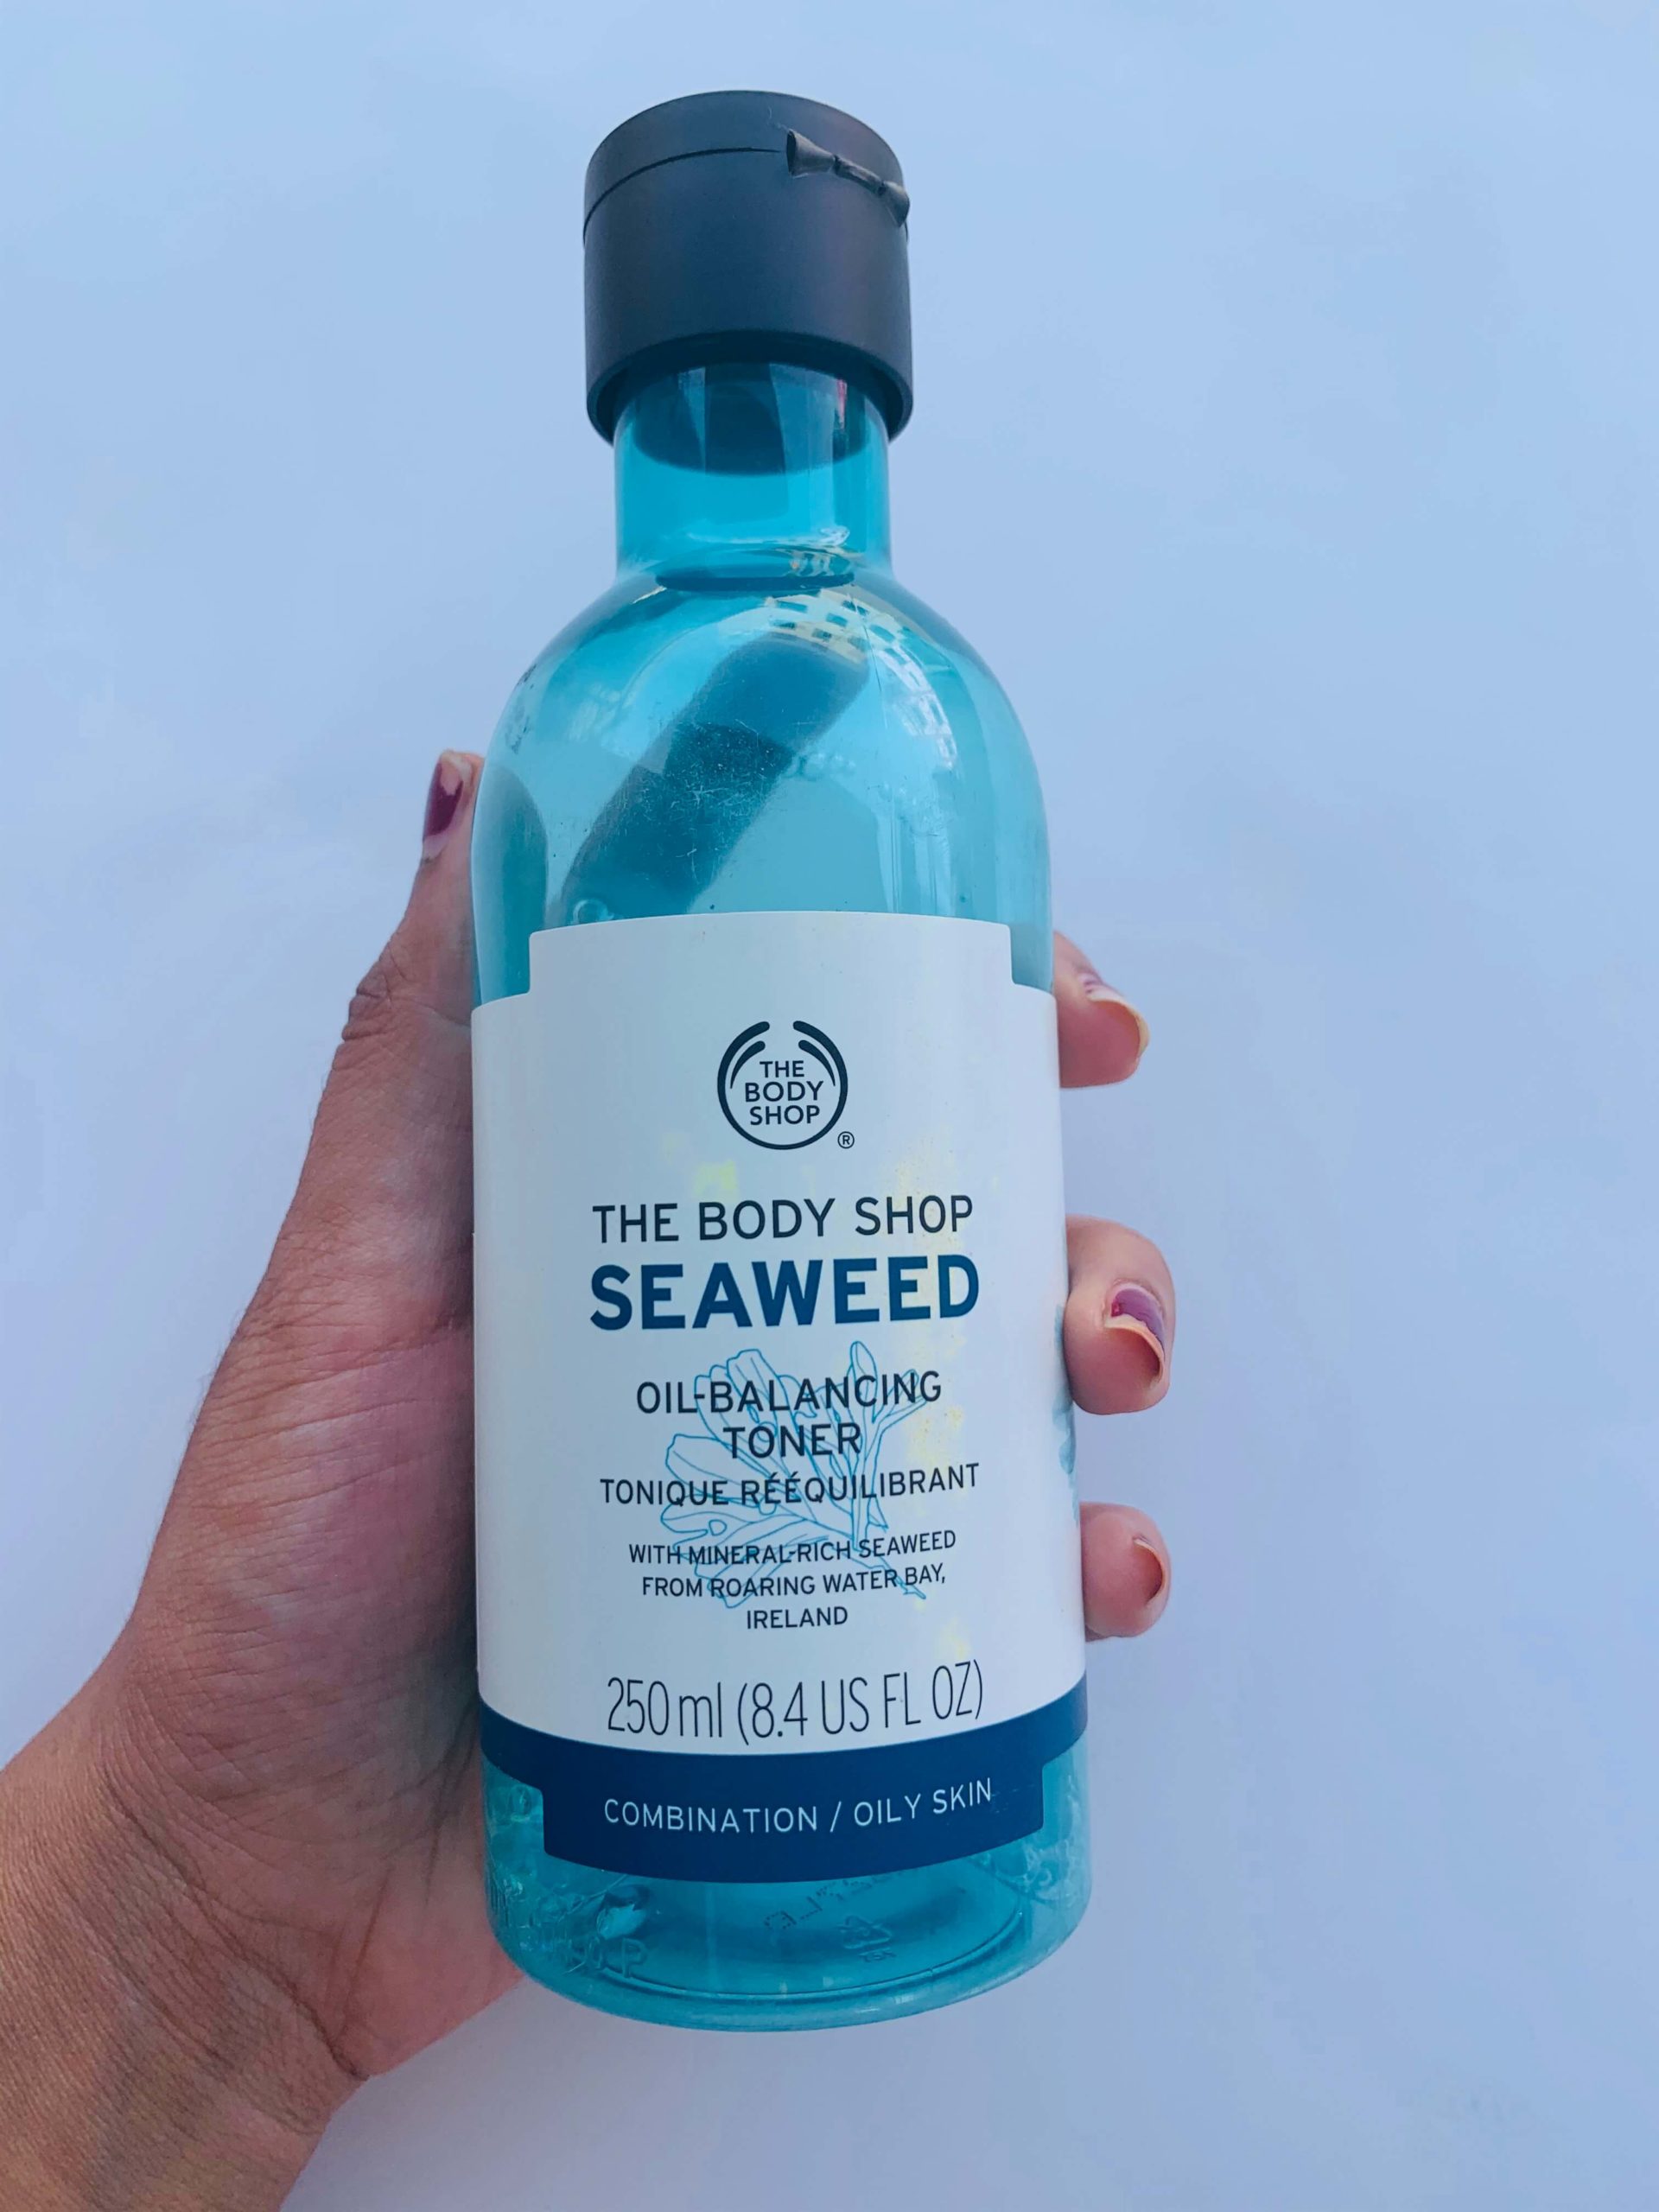 The body shop seaweed oil balancing toner review